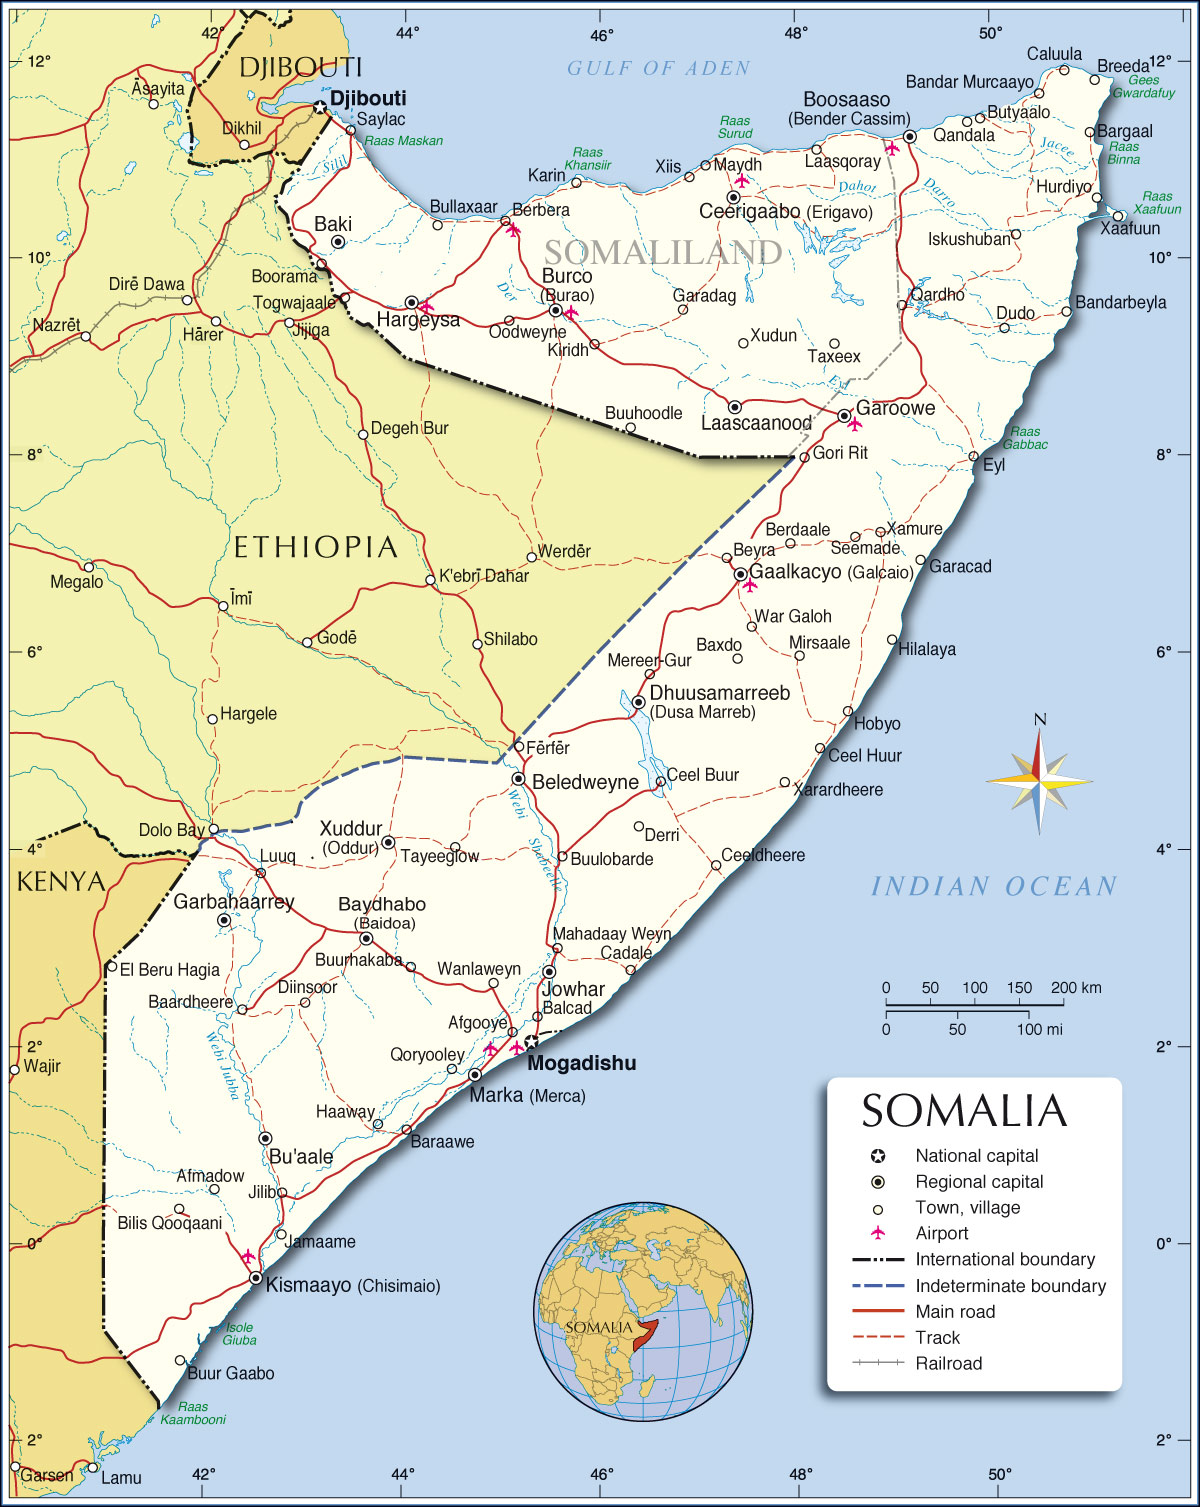 Somalia on emaze